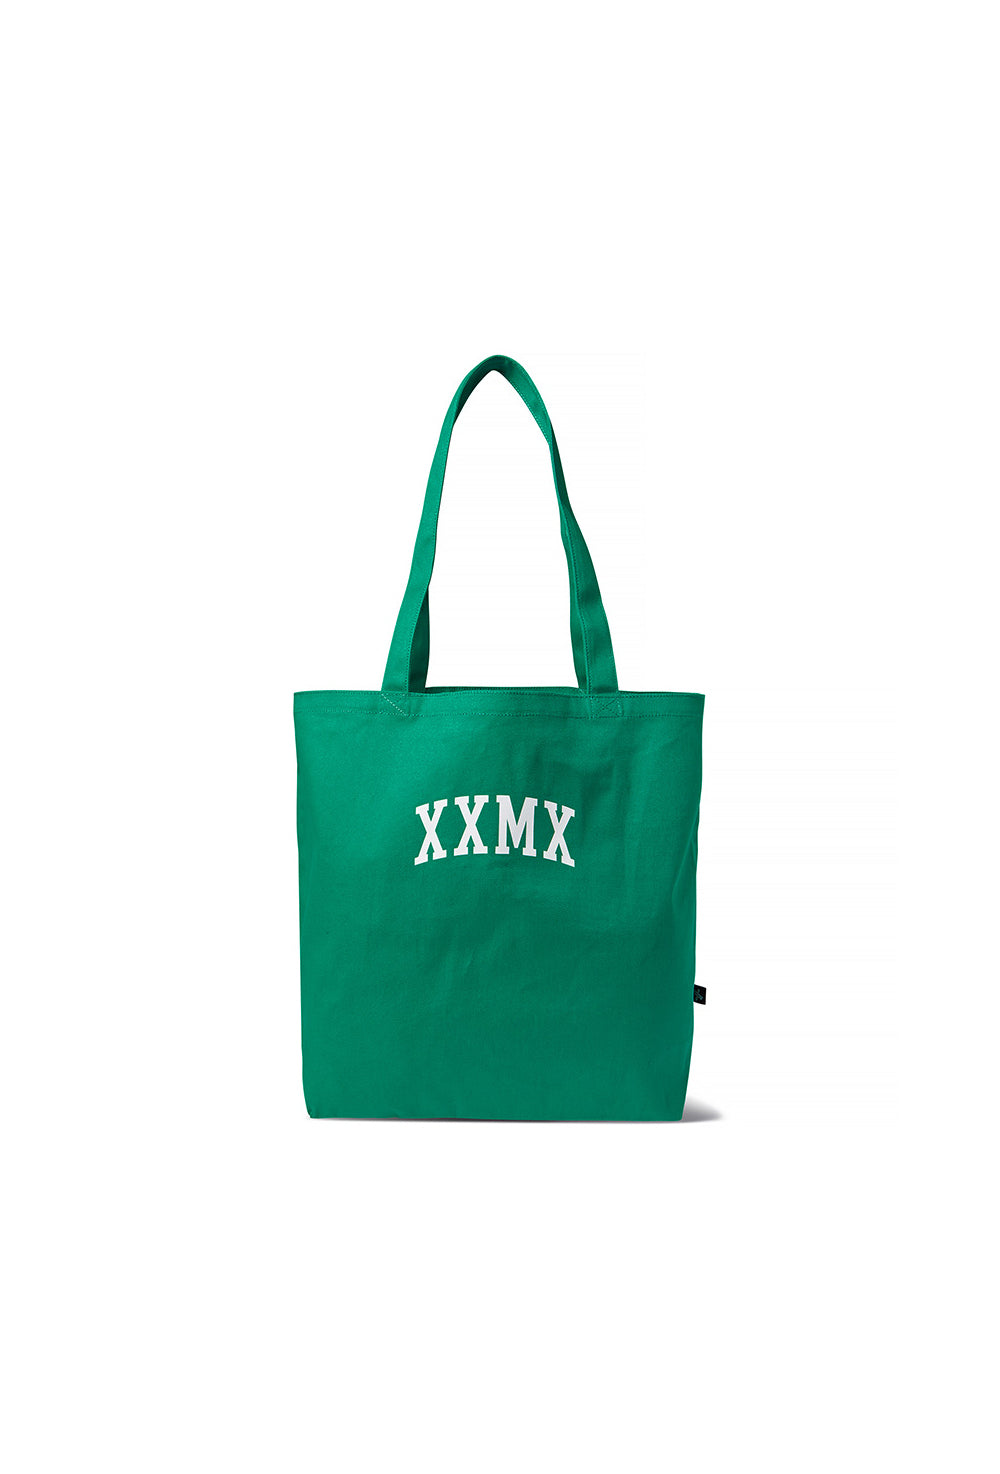 XXMX Eco Bag - Pepper Green